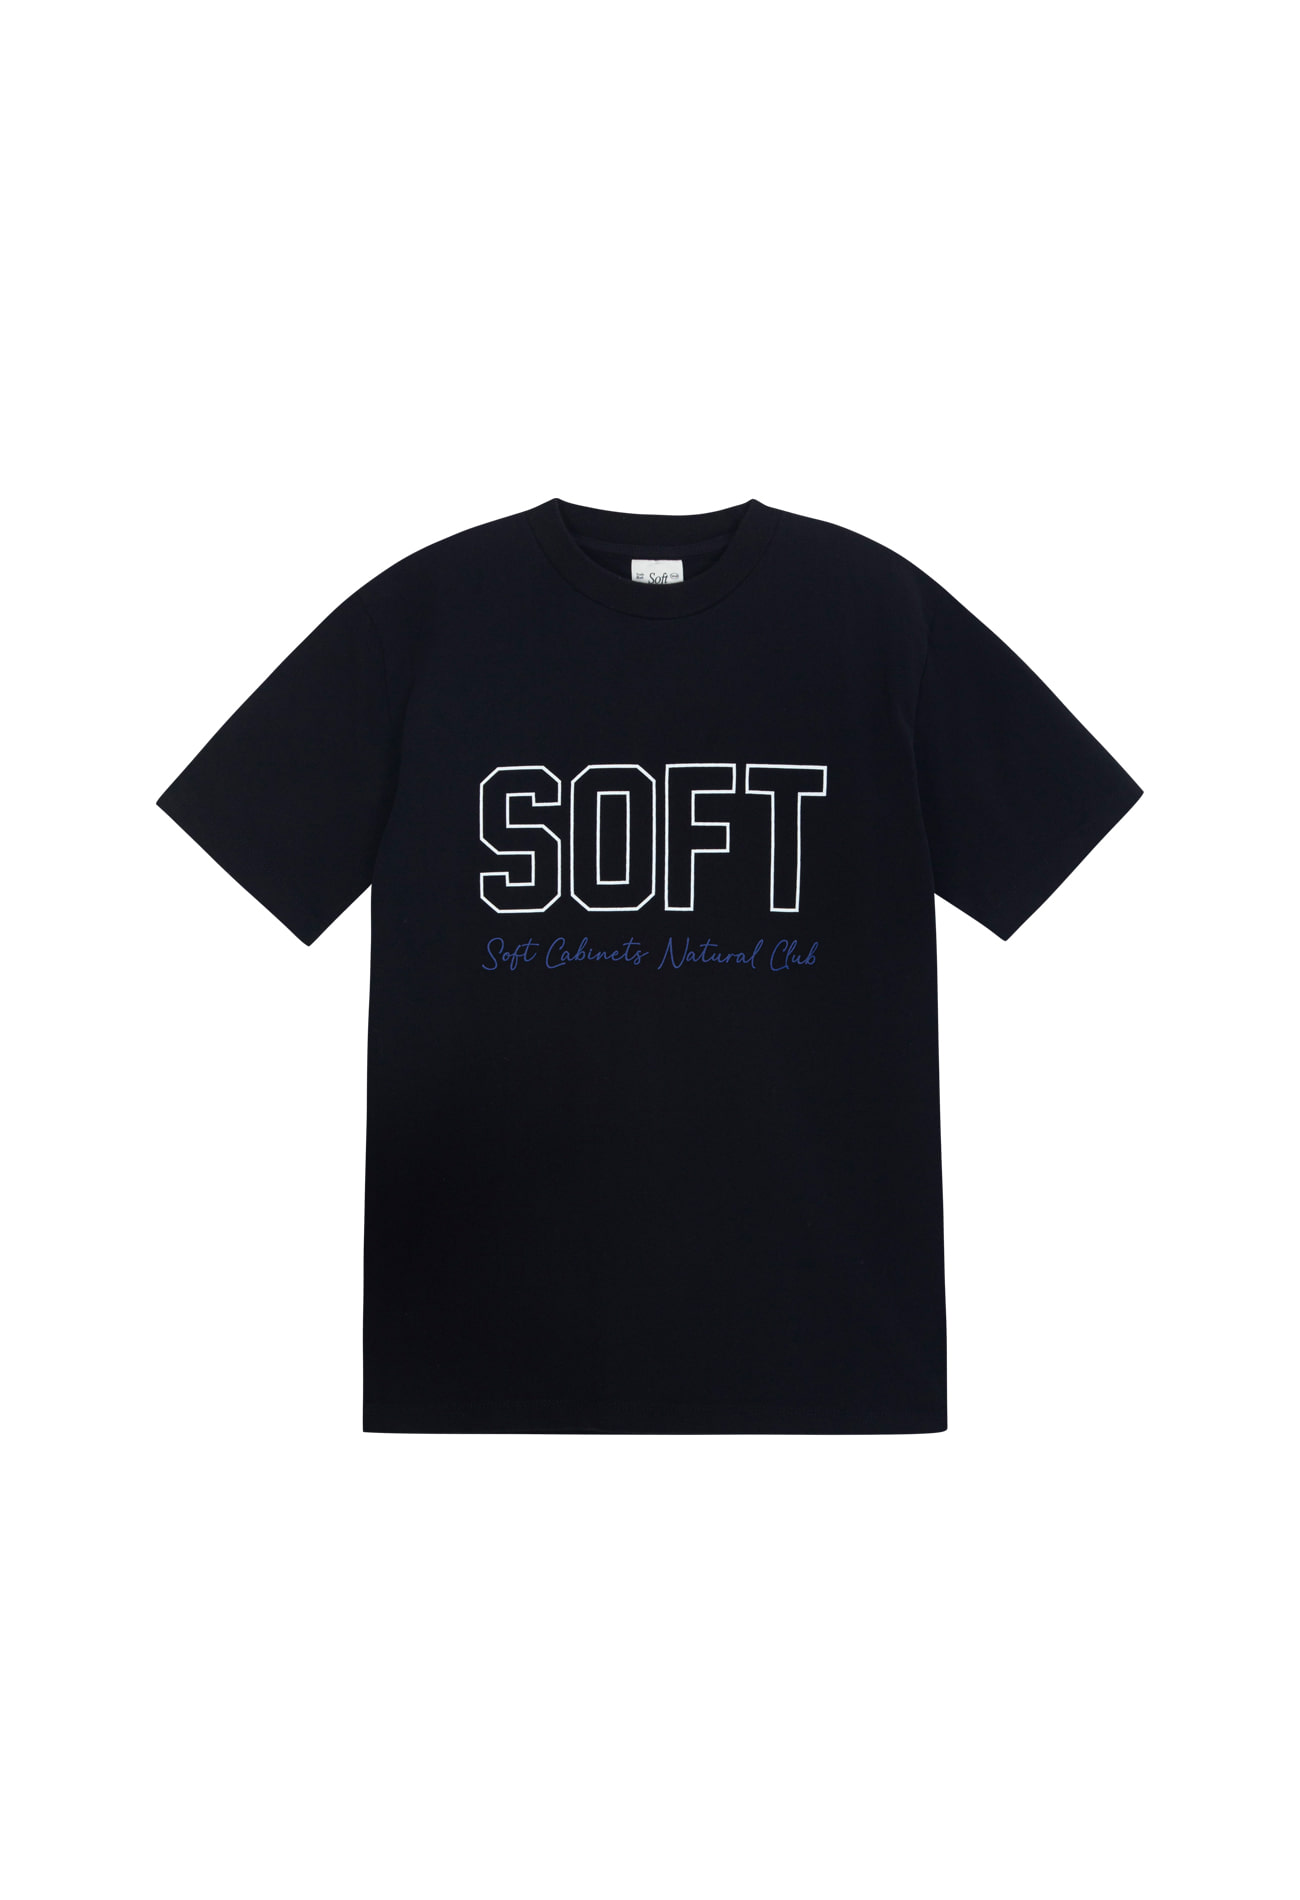 SOFT T-SHIRT (BLACK)